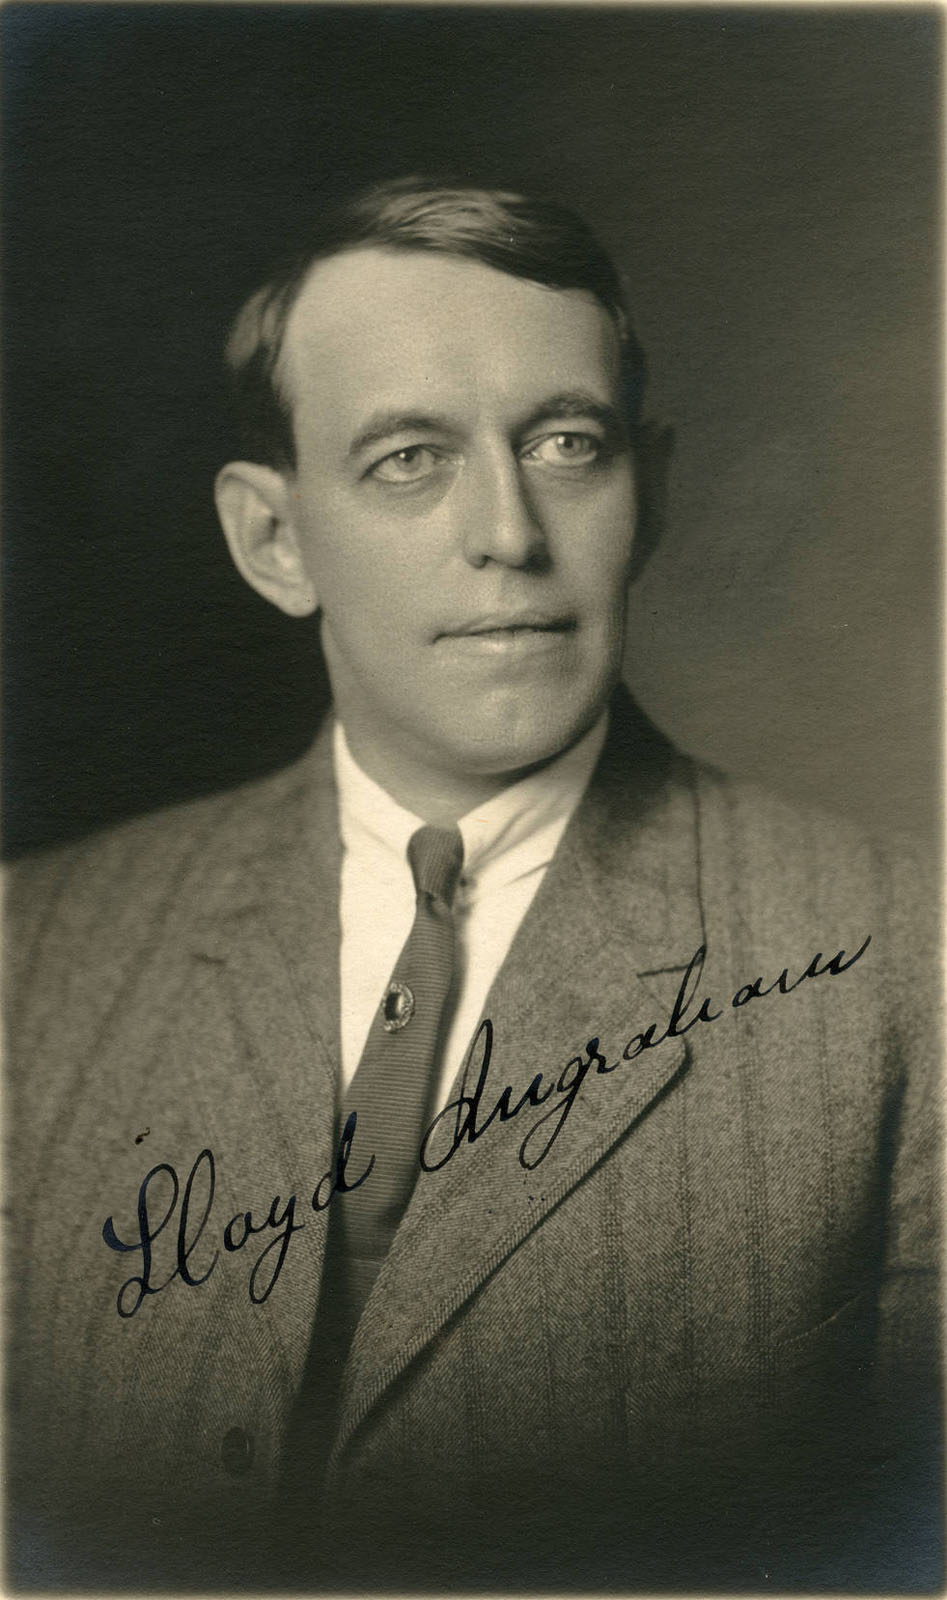 Lloyd Ingraham